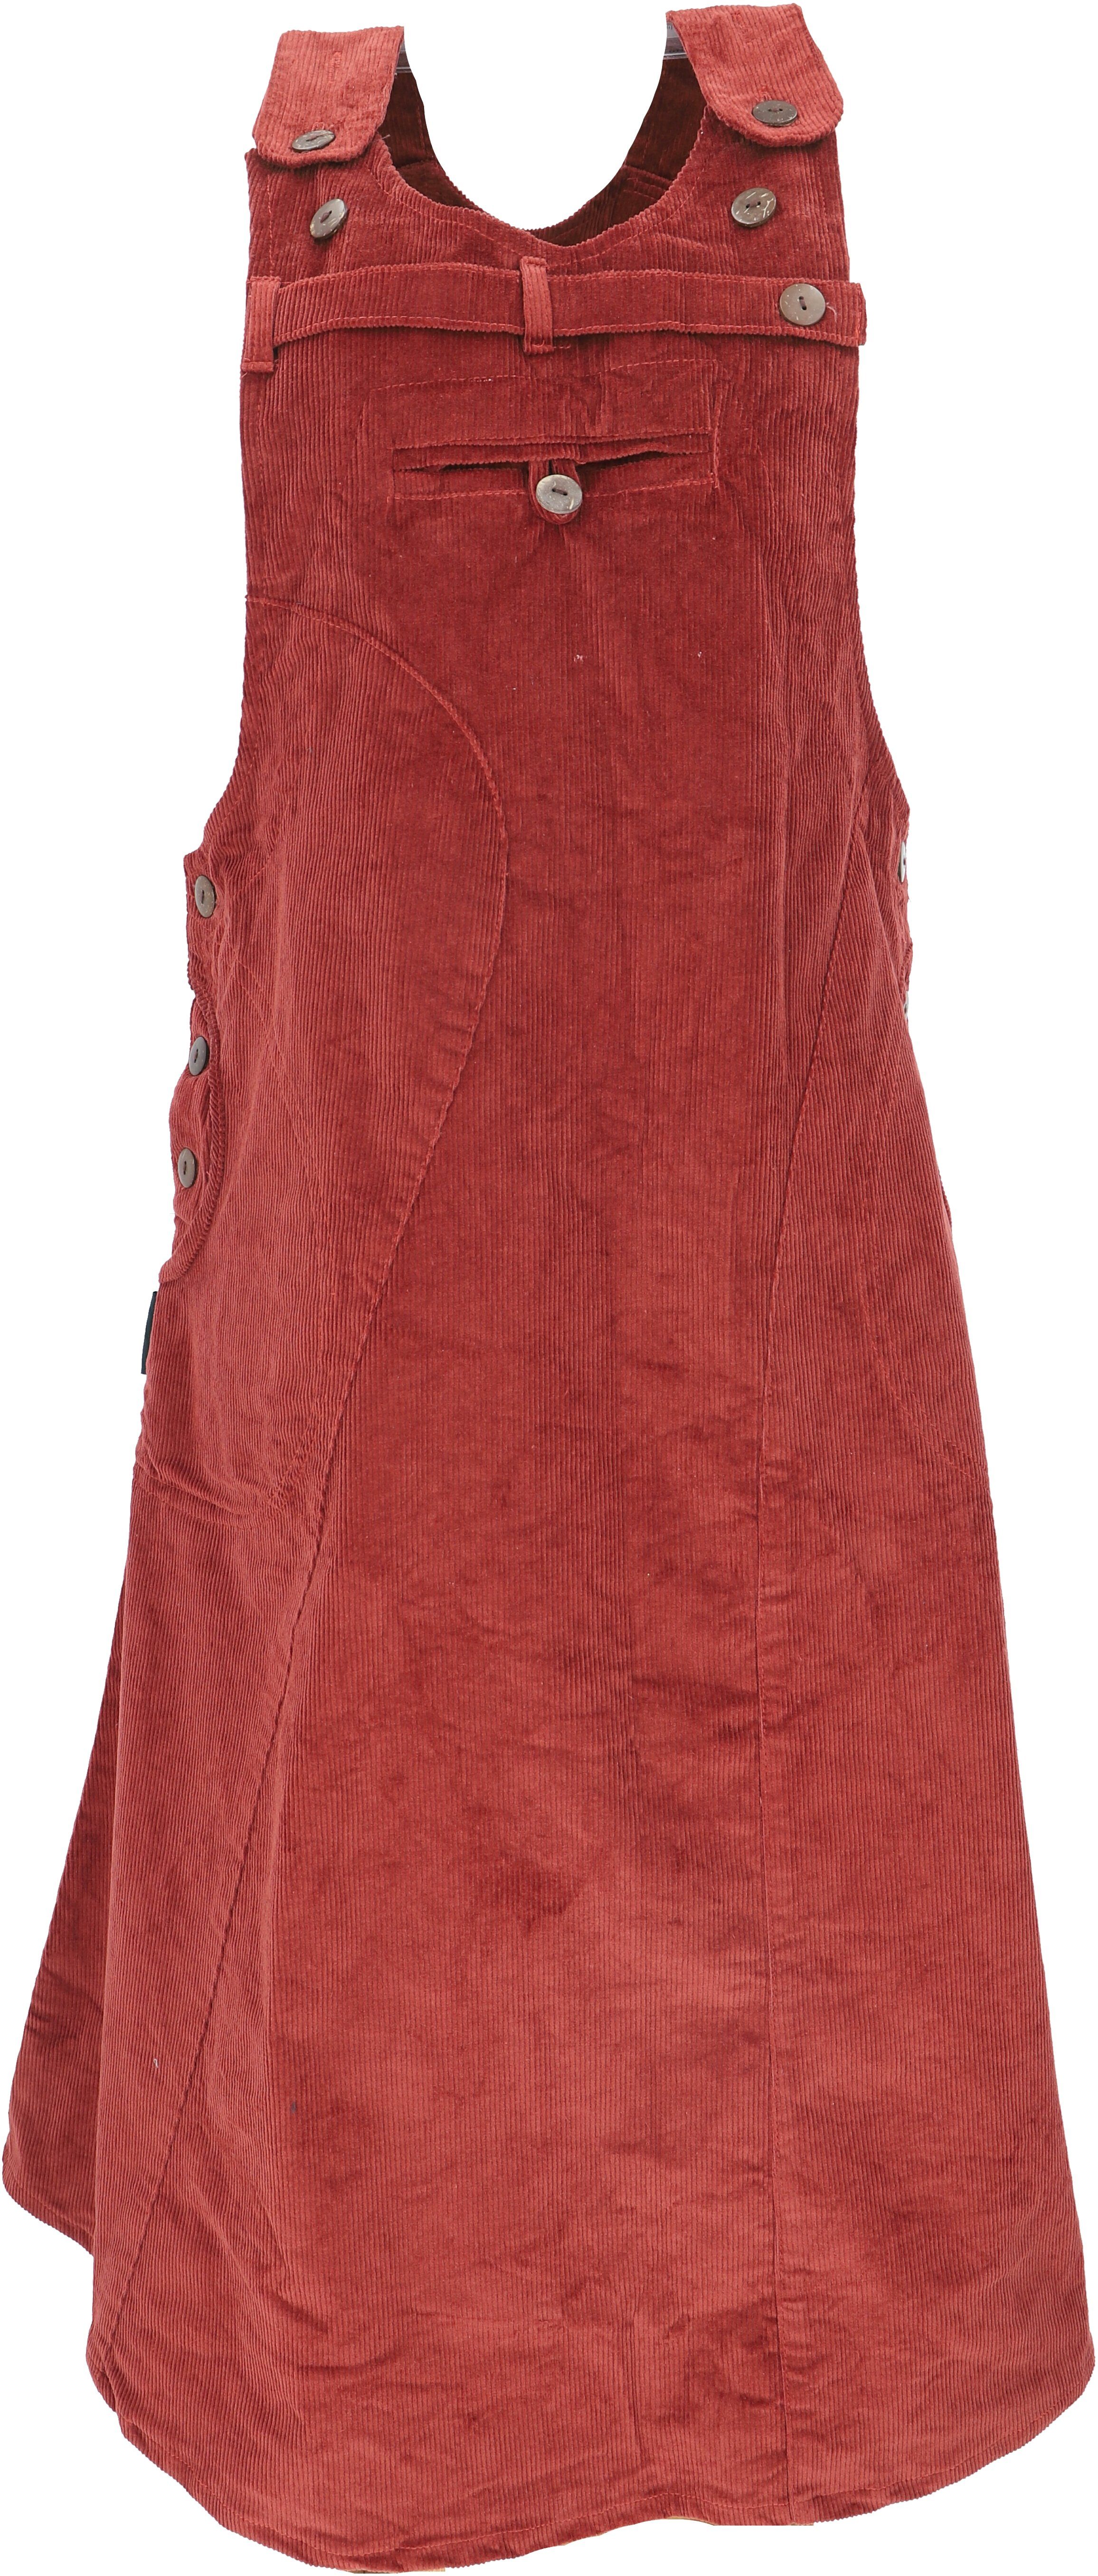 Trägerkleid, -.. Guru-Shop Minirock alternative Hippierock rostorange Bekleidung Cord-Latzrock,